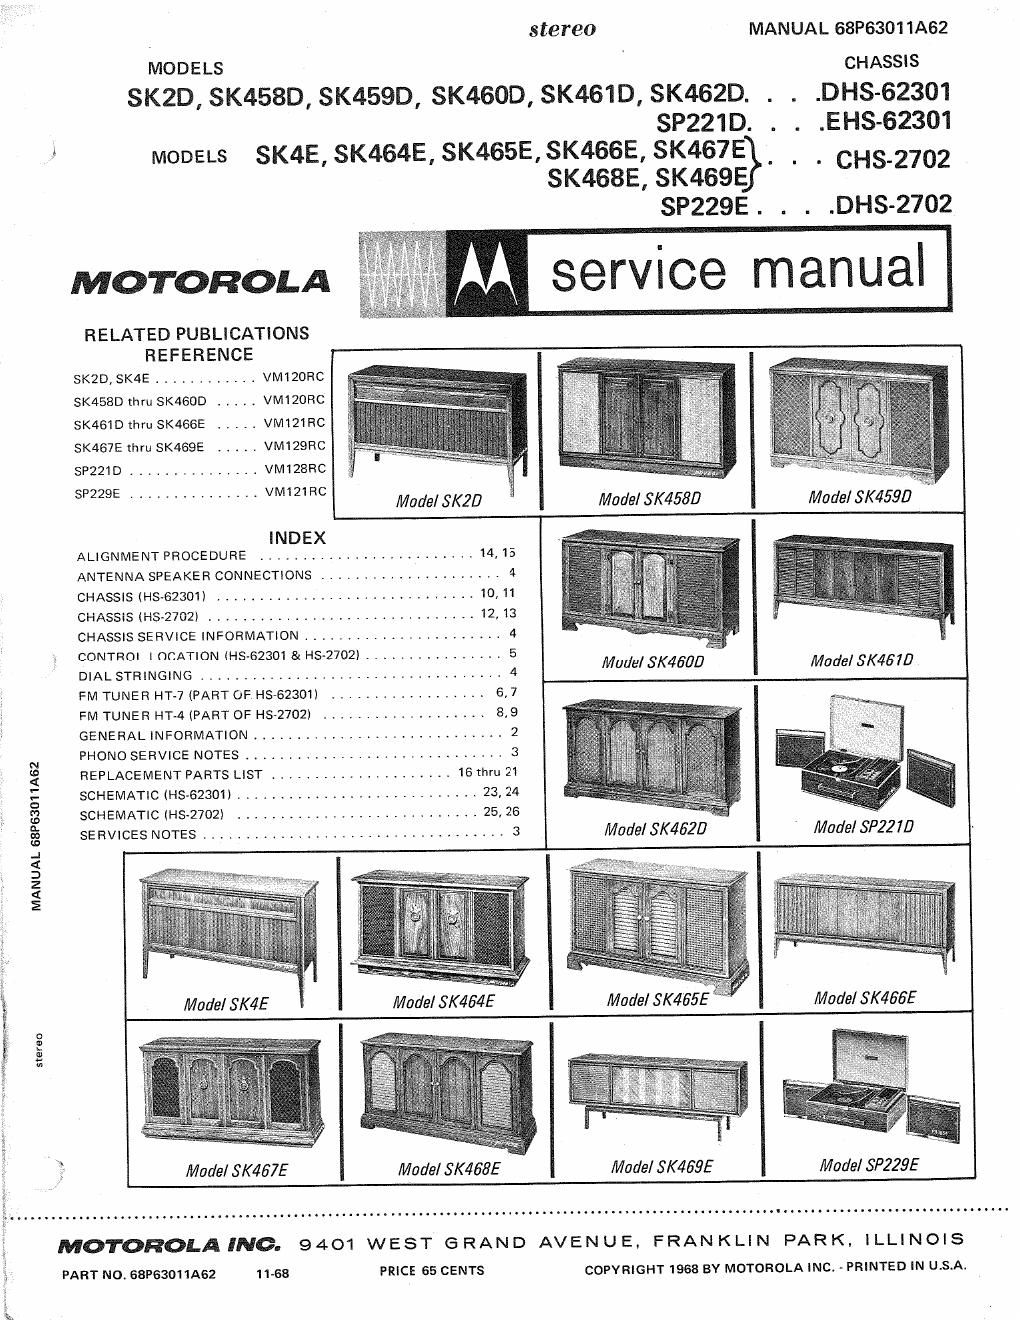 motorola sk 465 e service manual